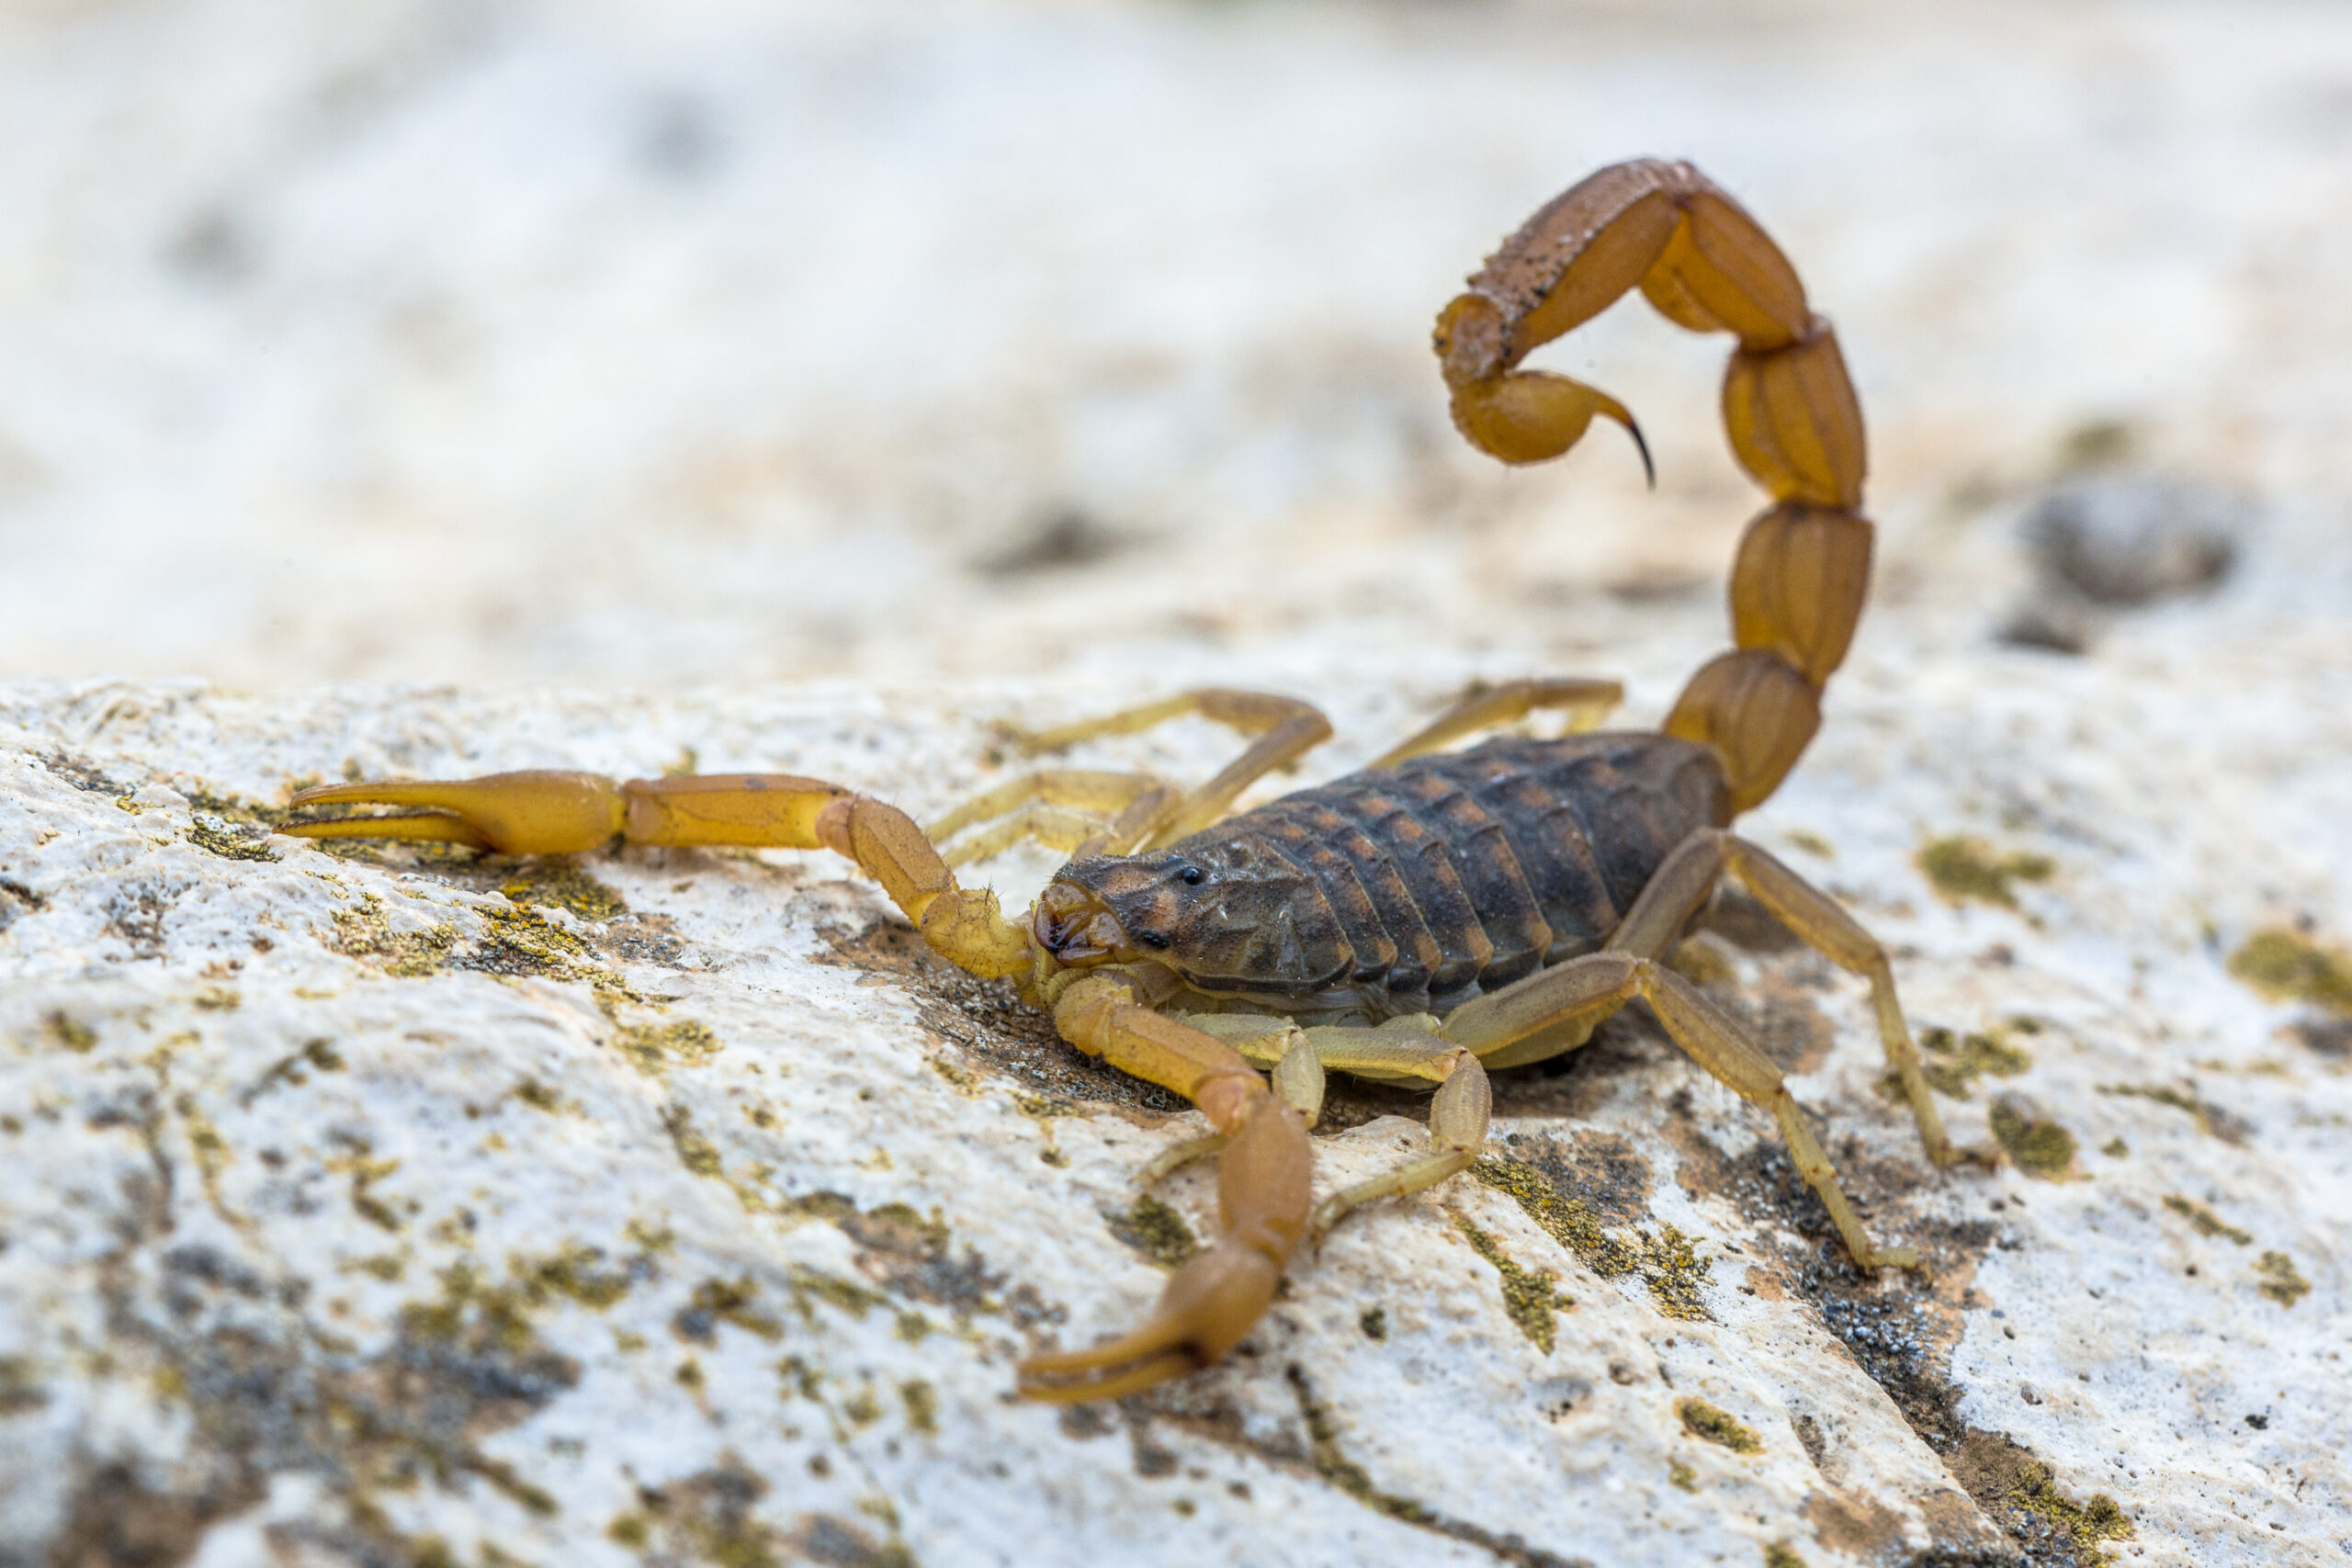 Scorpions Exterminator - How To Identify & Get Rid Of Scorpions